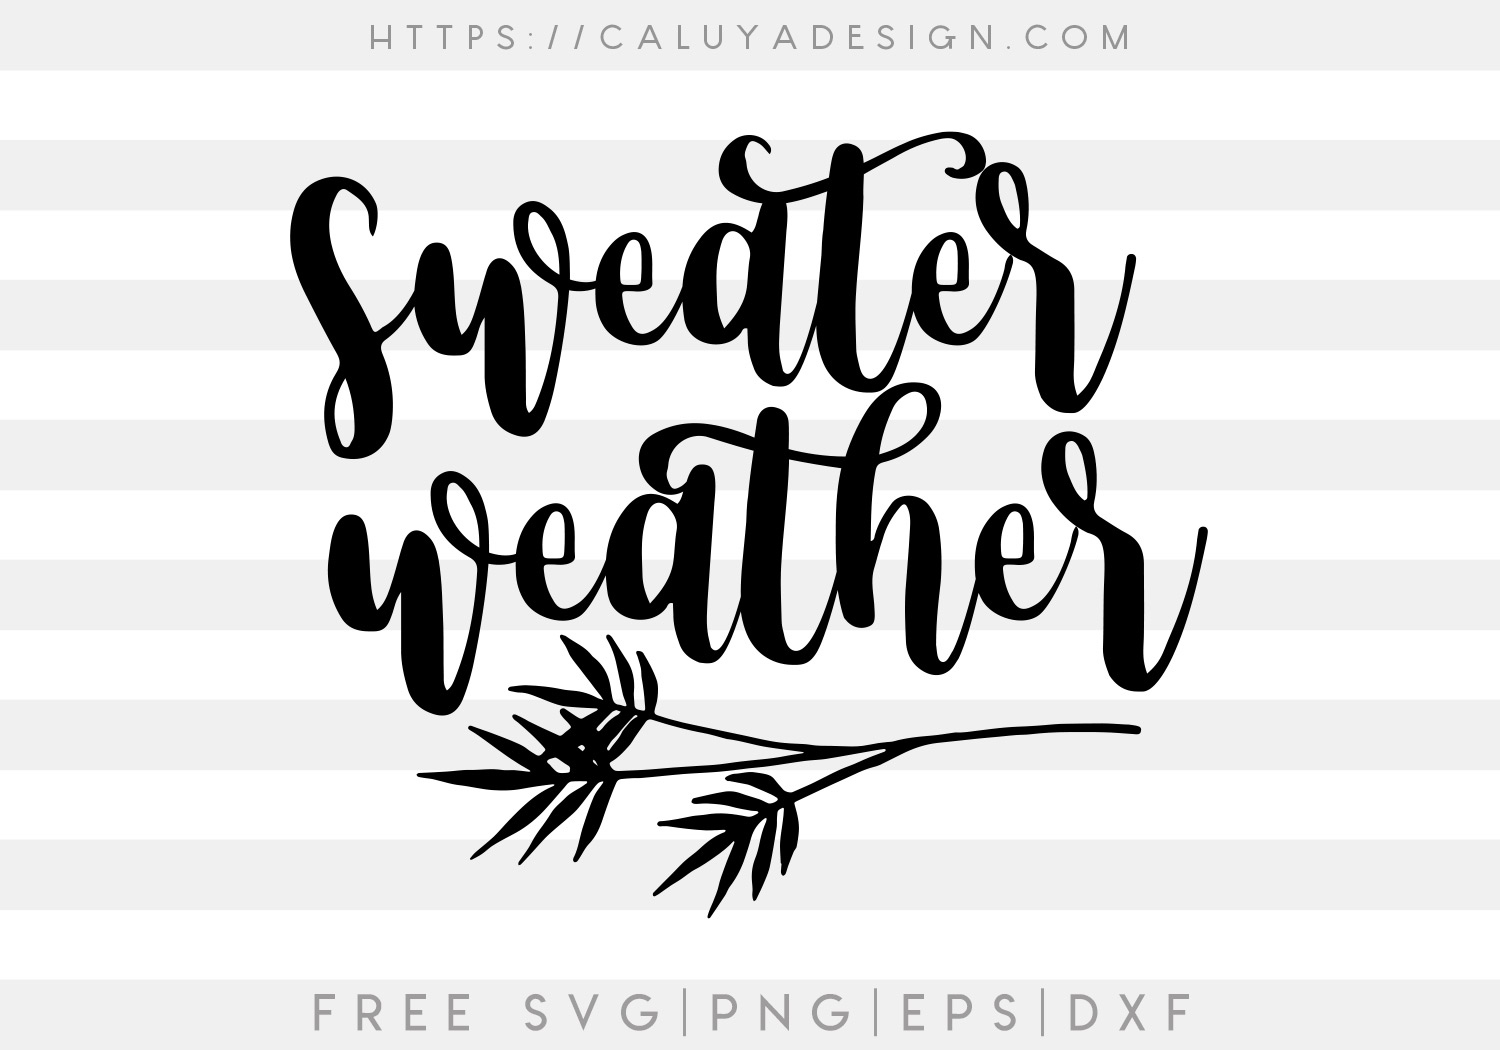 Free Sweater Weather SVG Cut File